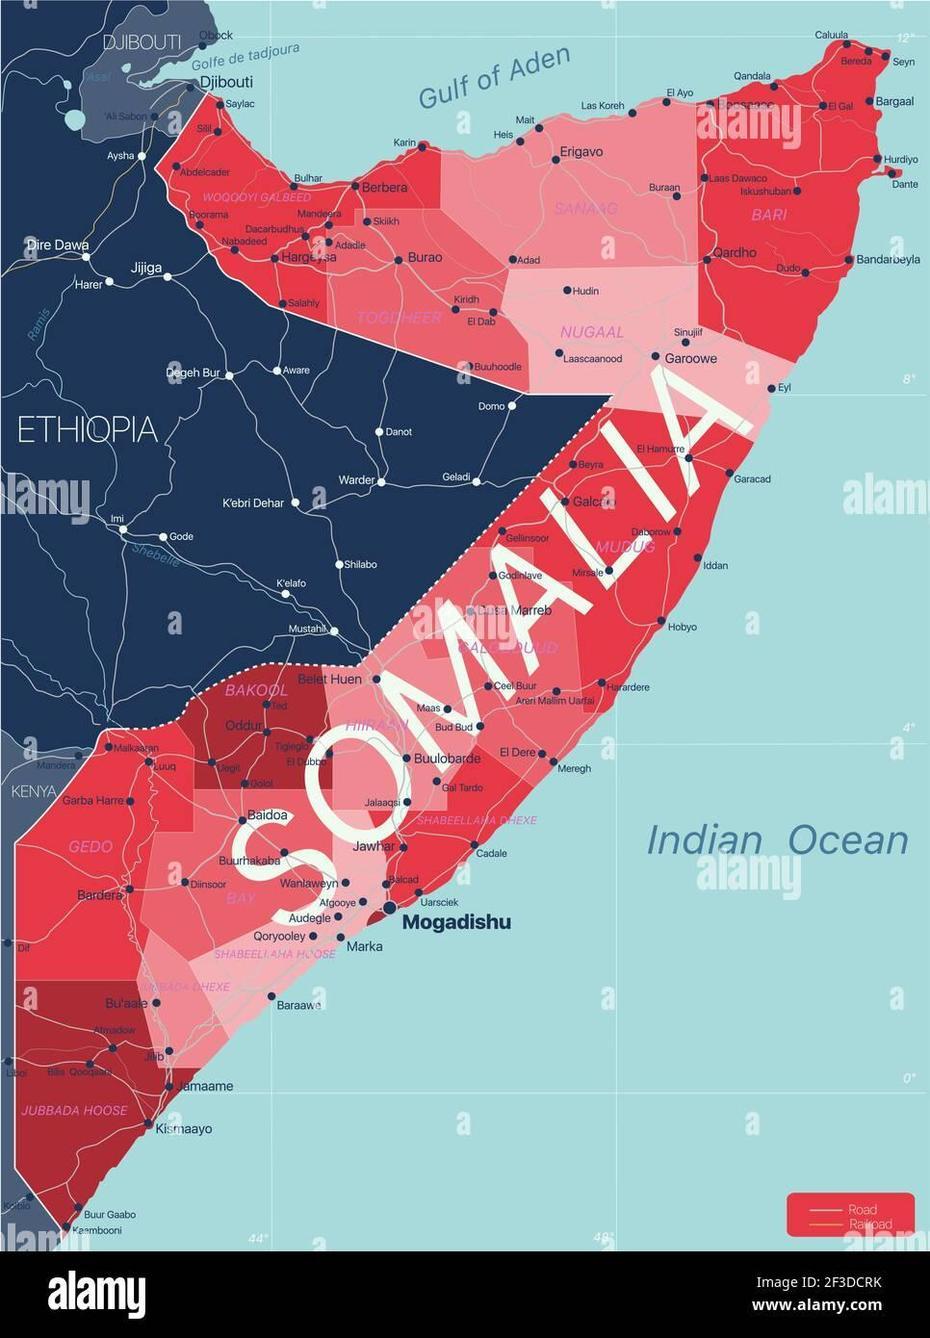 Marka Somalia High Resolution Stock Photography And Images – Alamy, Marka, Somalia, Jilib Somalia, Somalia  Google